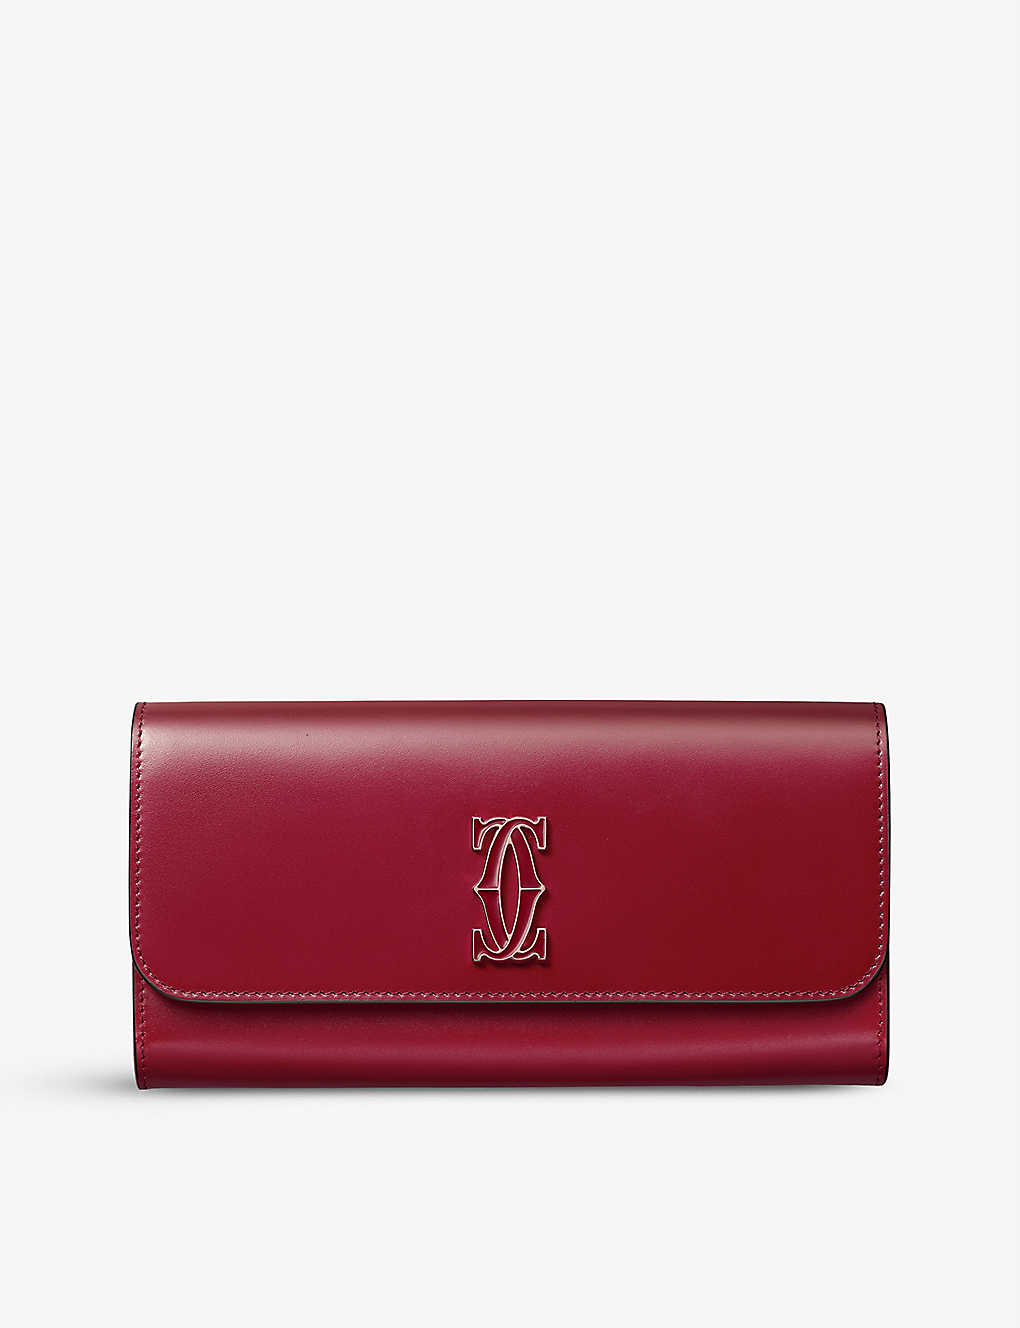 Cartier Womens Cherry Red Double C De Leather Wallet